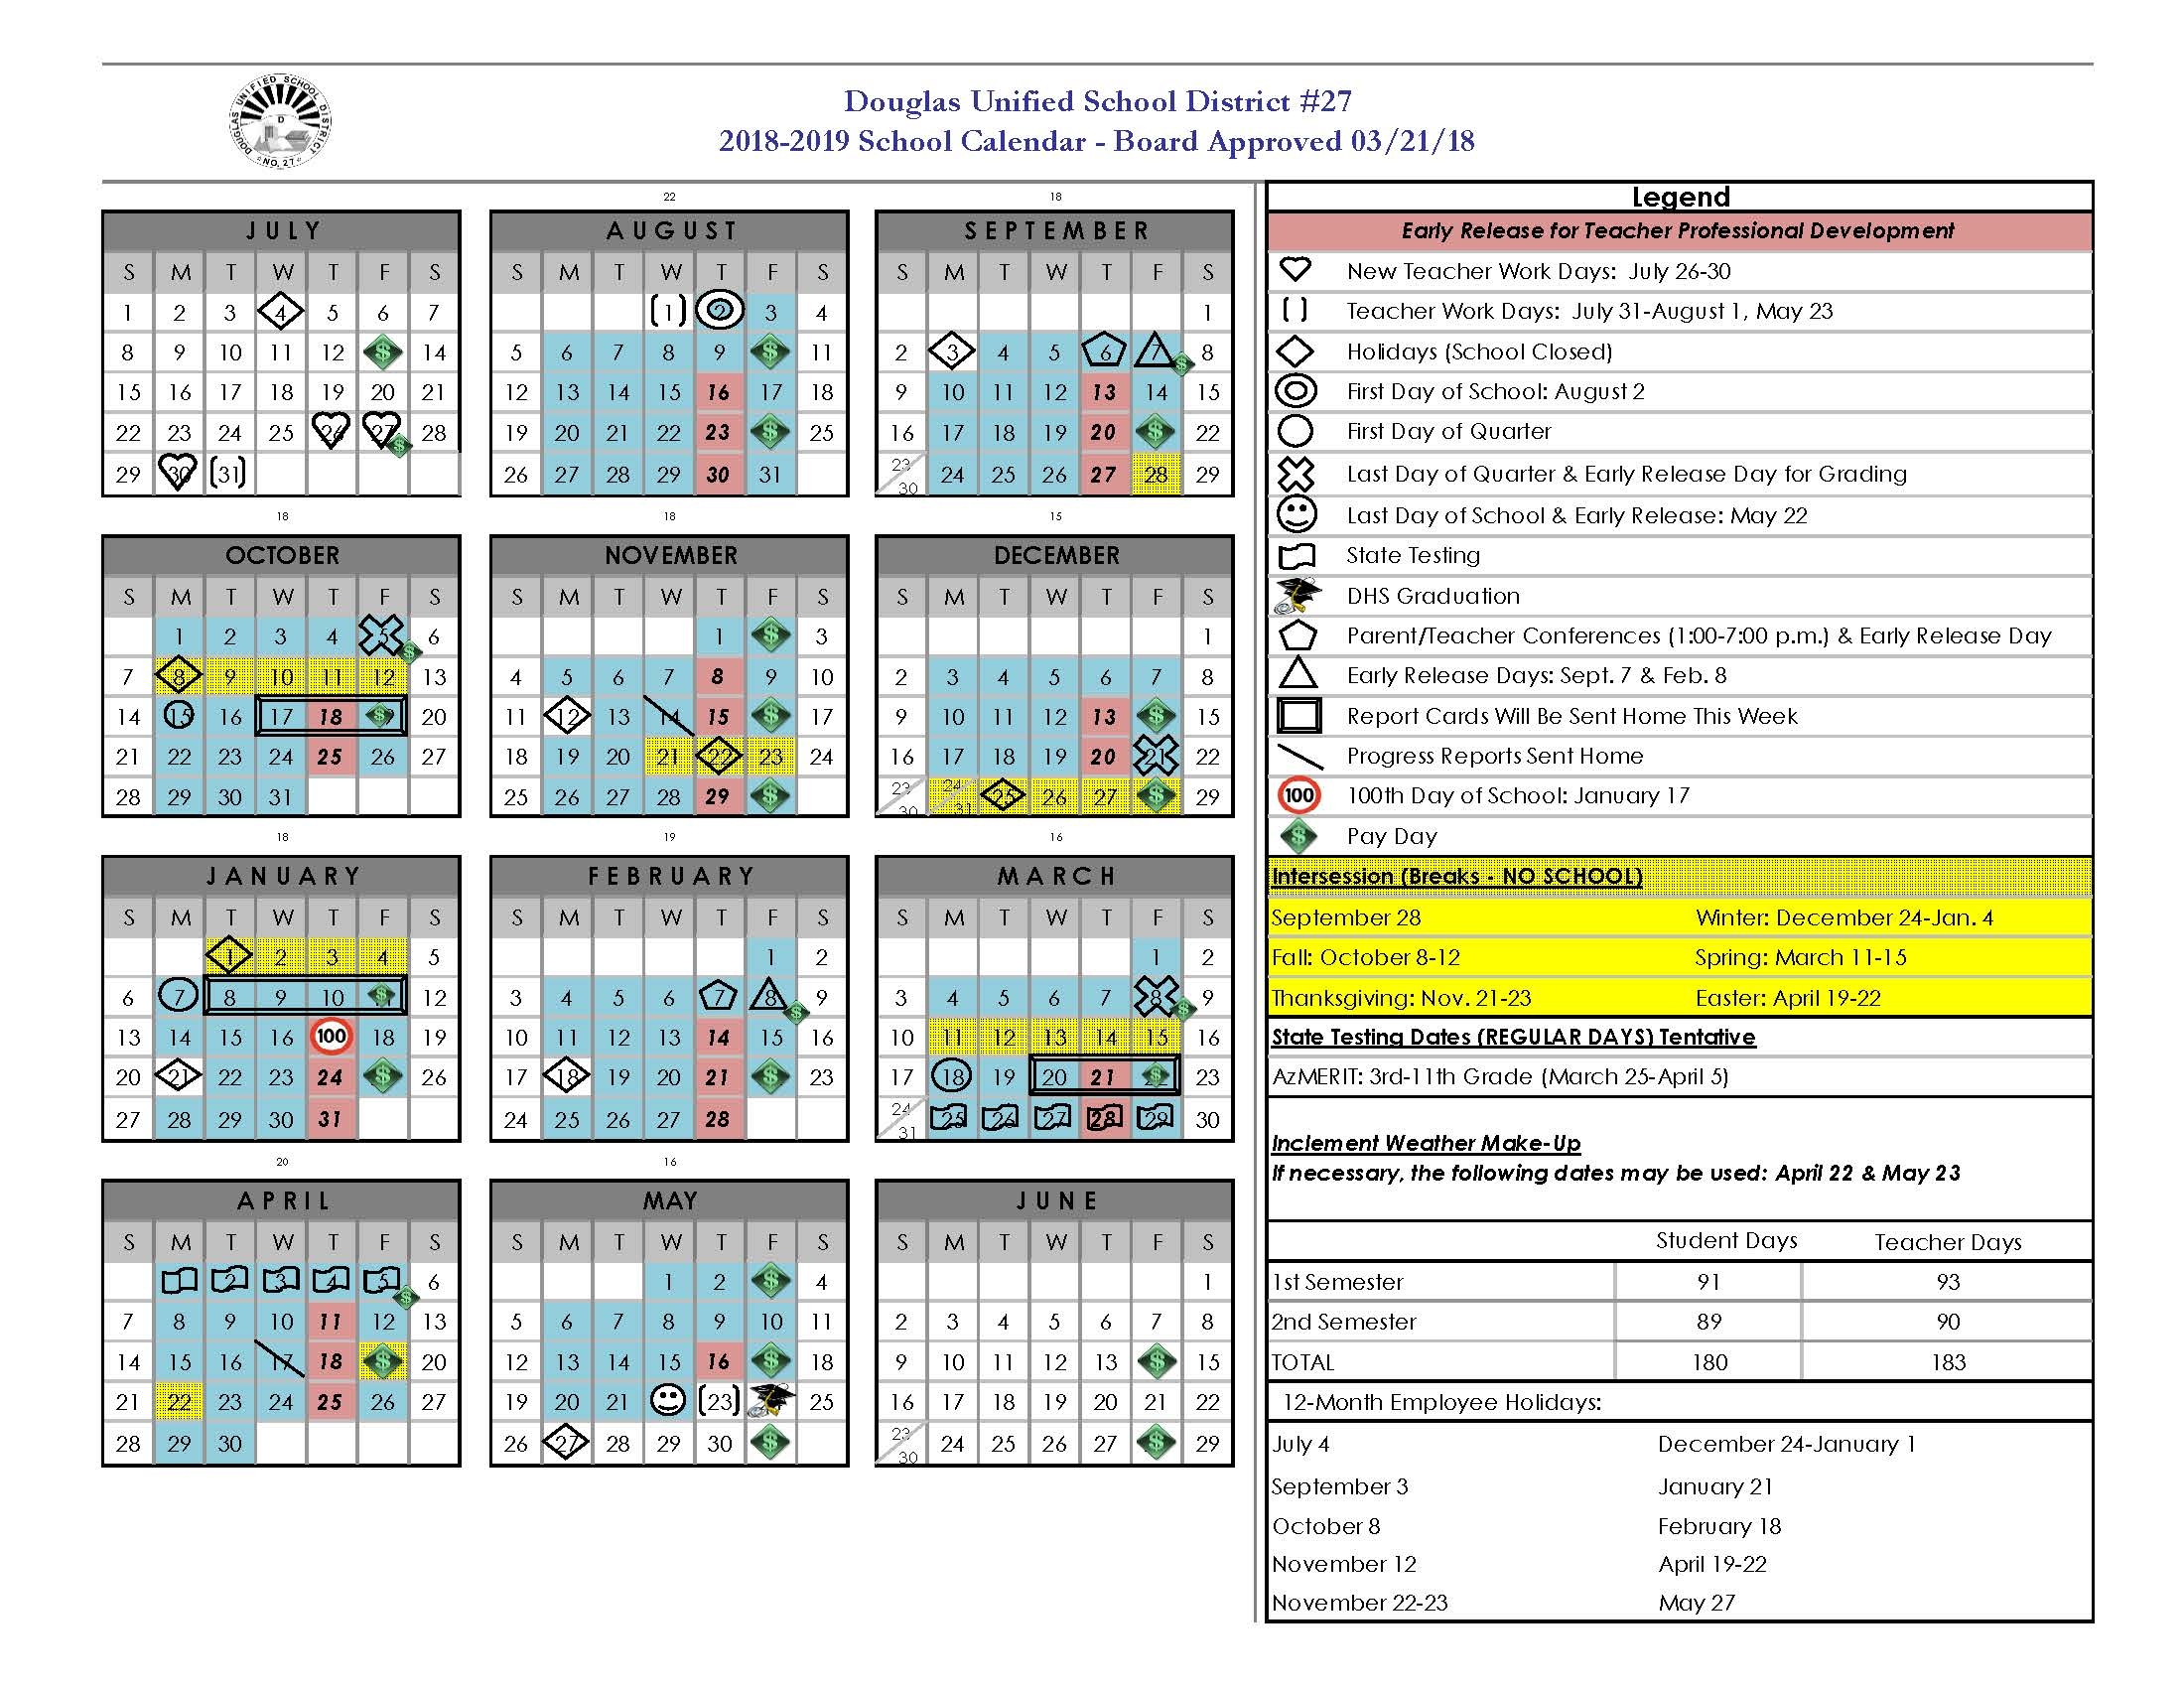 Douglas County School Calendar